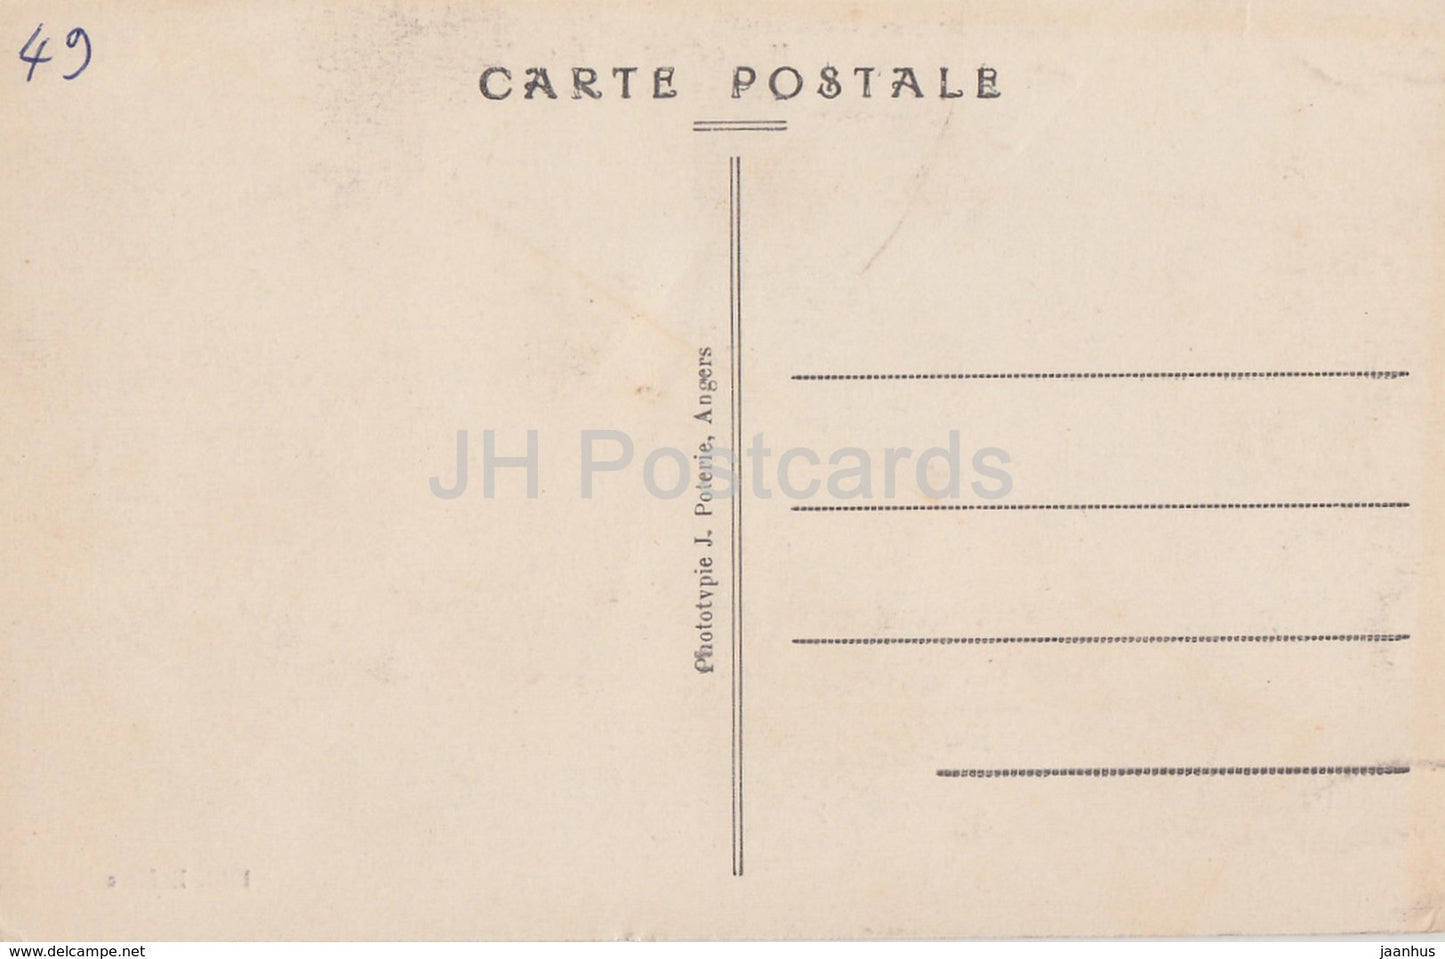 Marcé - Château de la Brideraie - château - carte postale ancienne - France - inutilisé